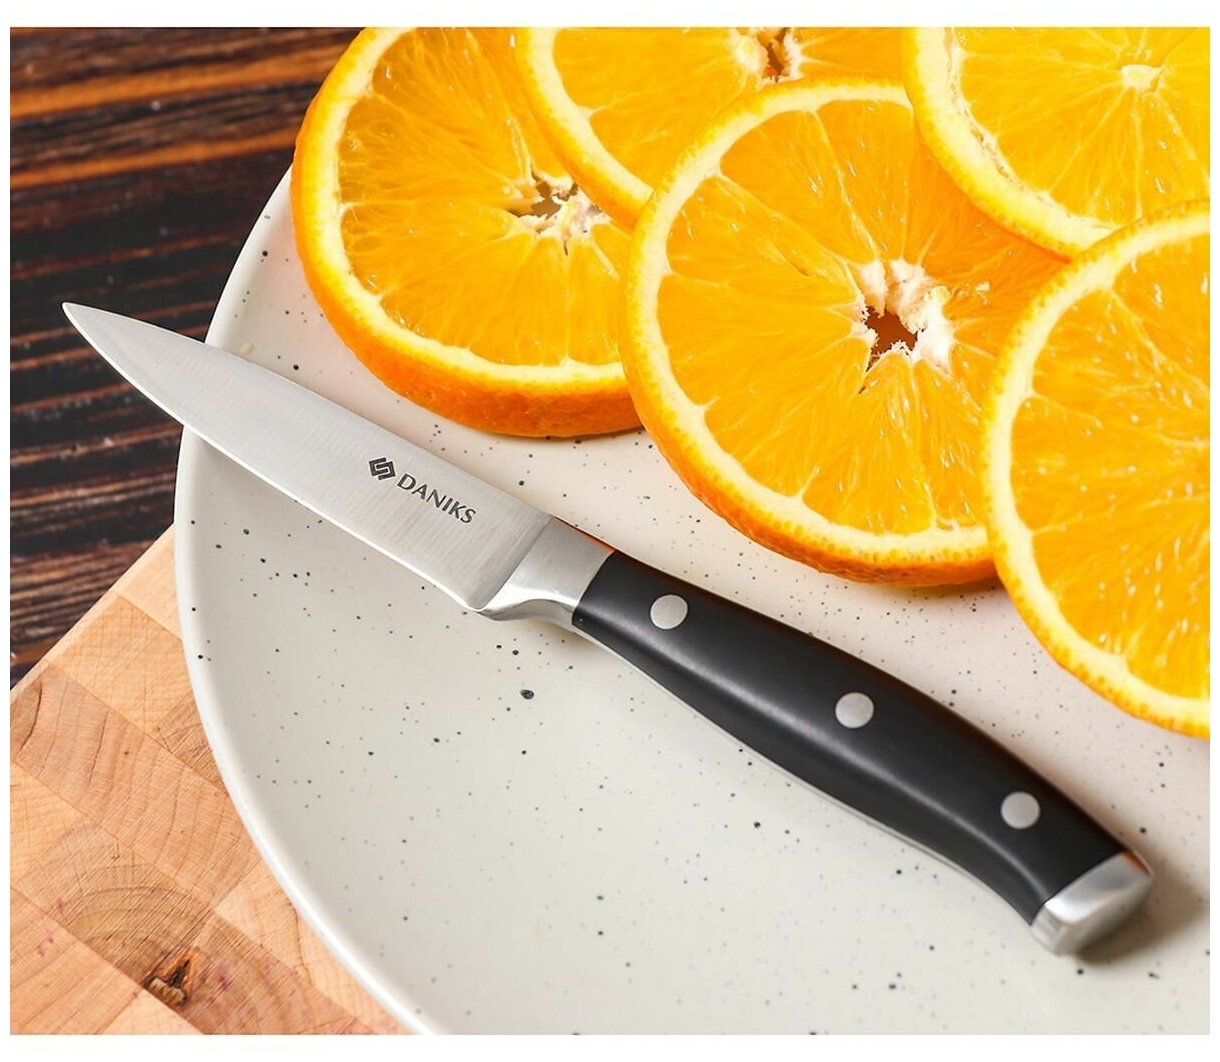 Нож кухонный Daniks Black для овощей нержавеющая сталь 9 см рукоятка пластик 161520-5